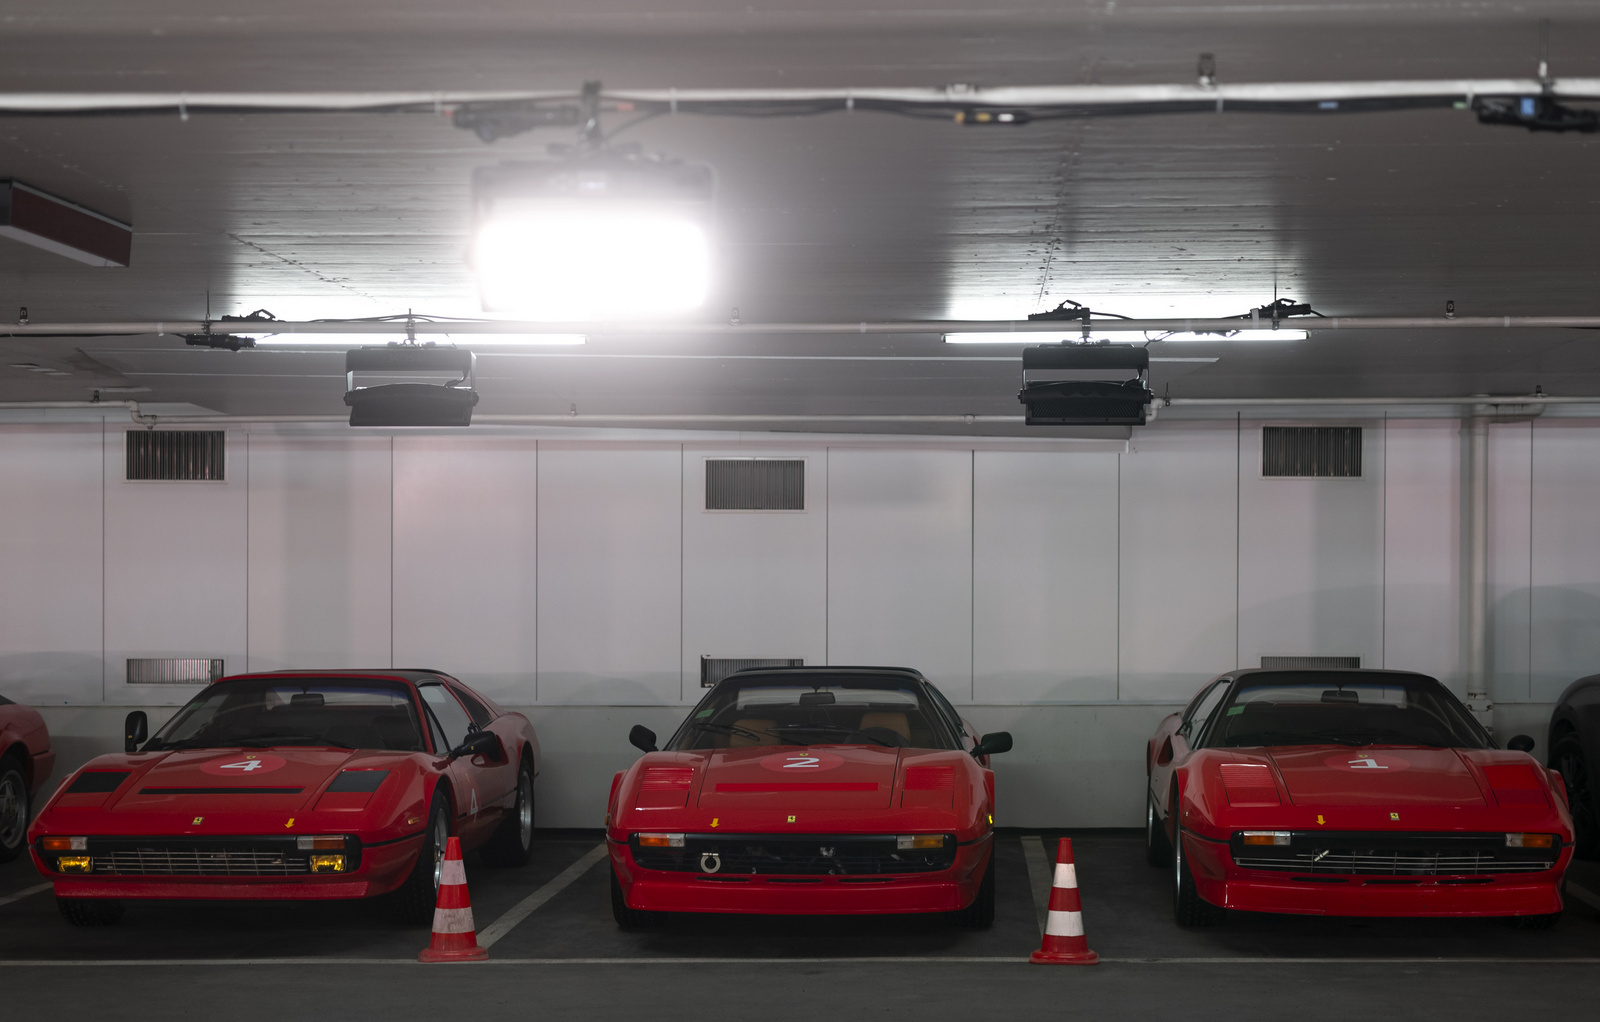 Ferrari 308 combo